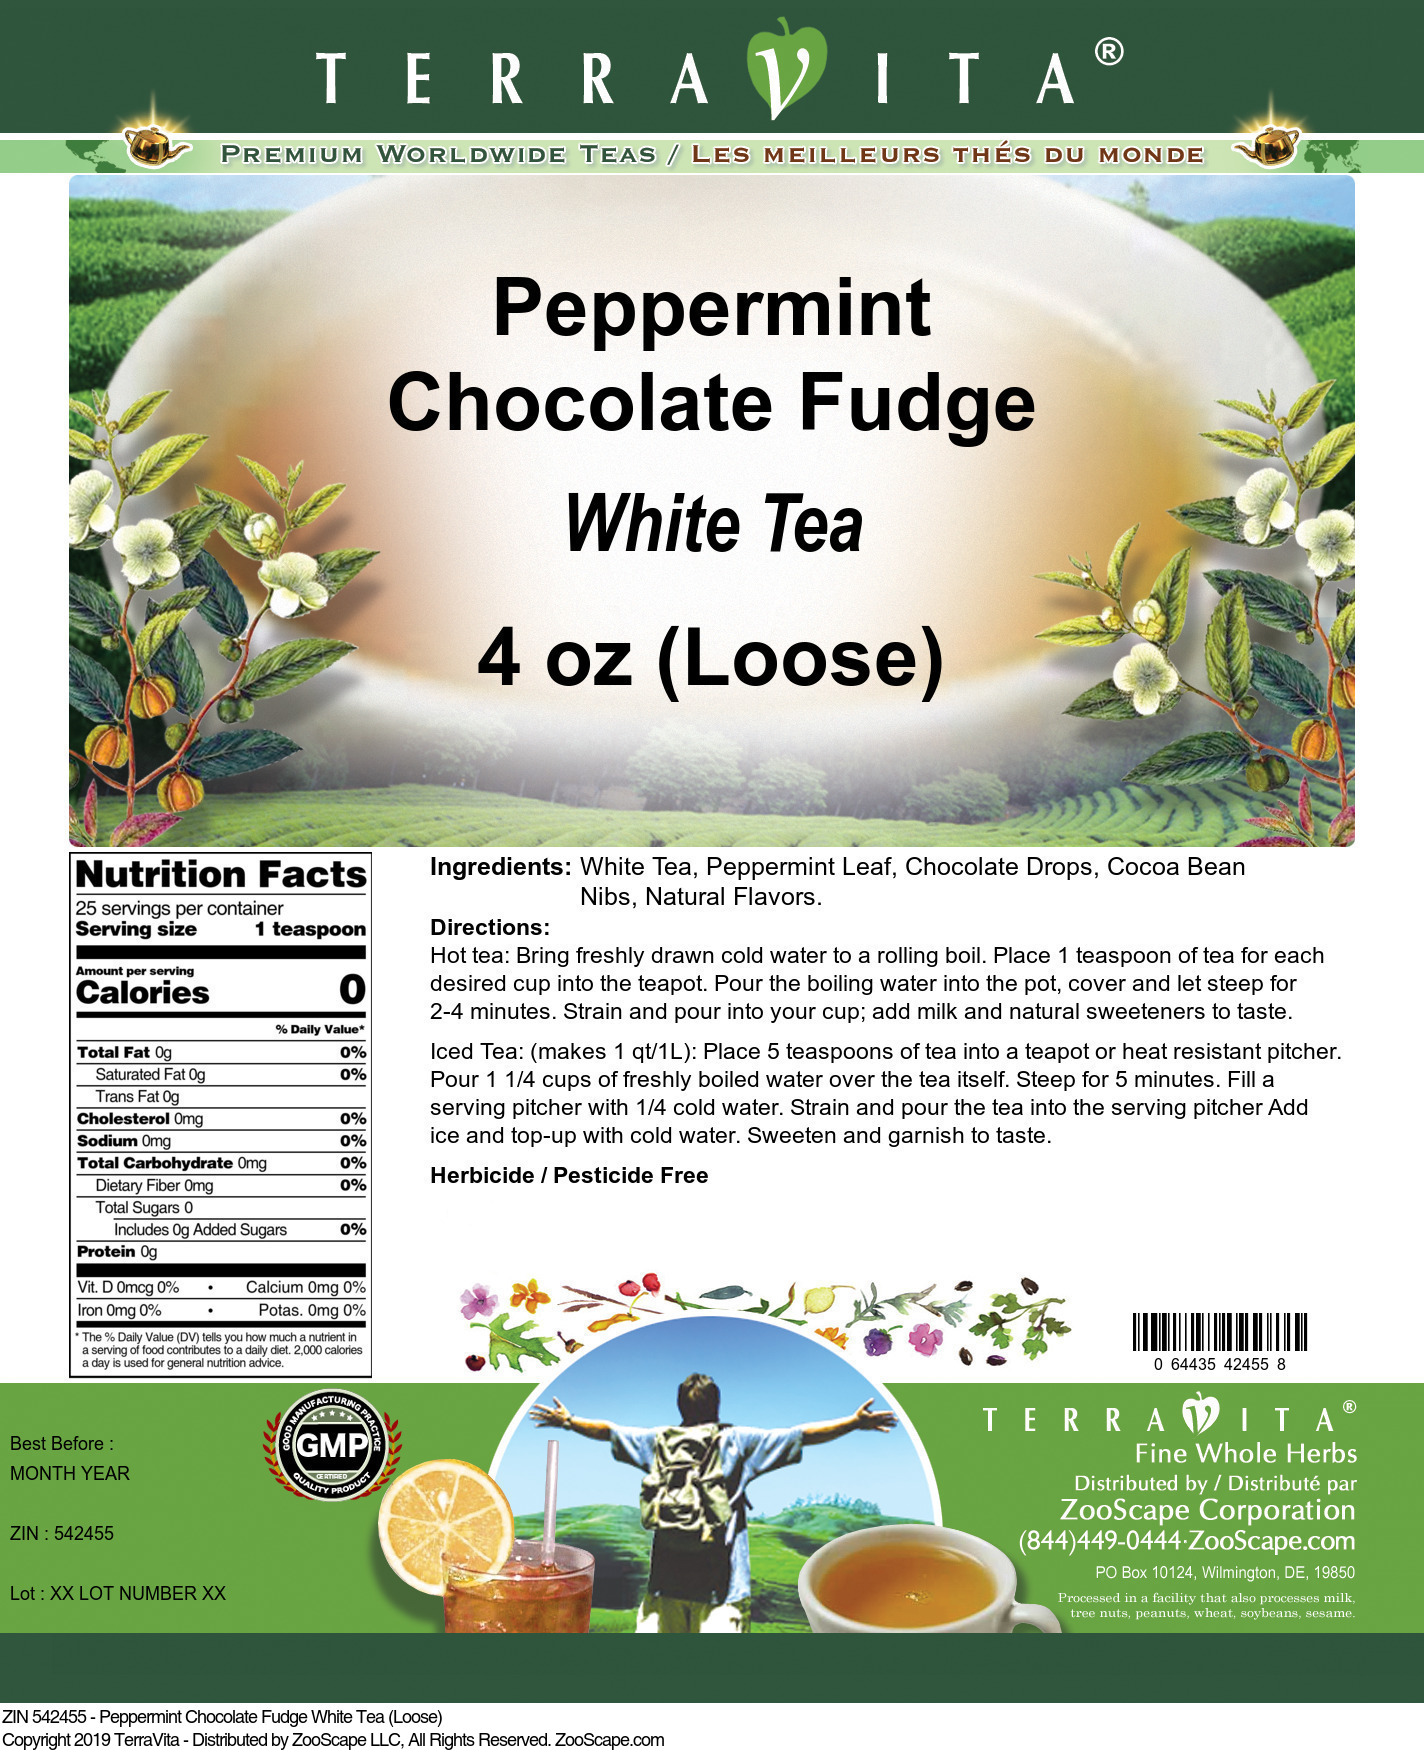 Peppermint Chocolate Fudge White Tea (Loose) - Label